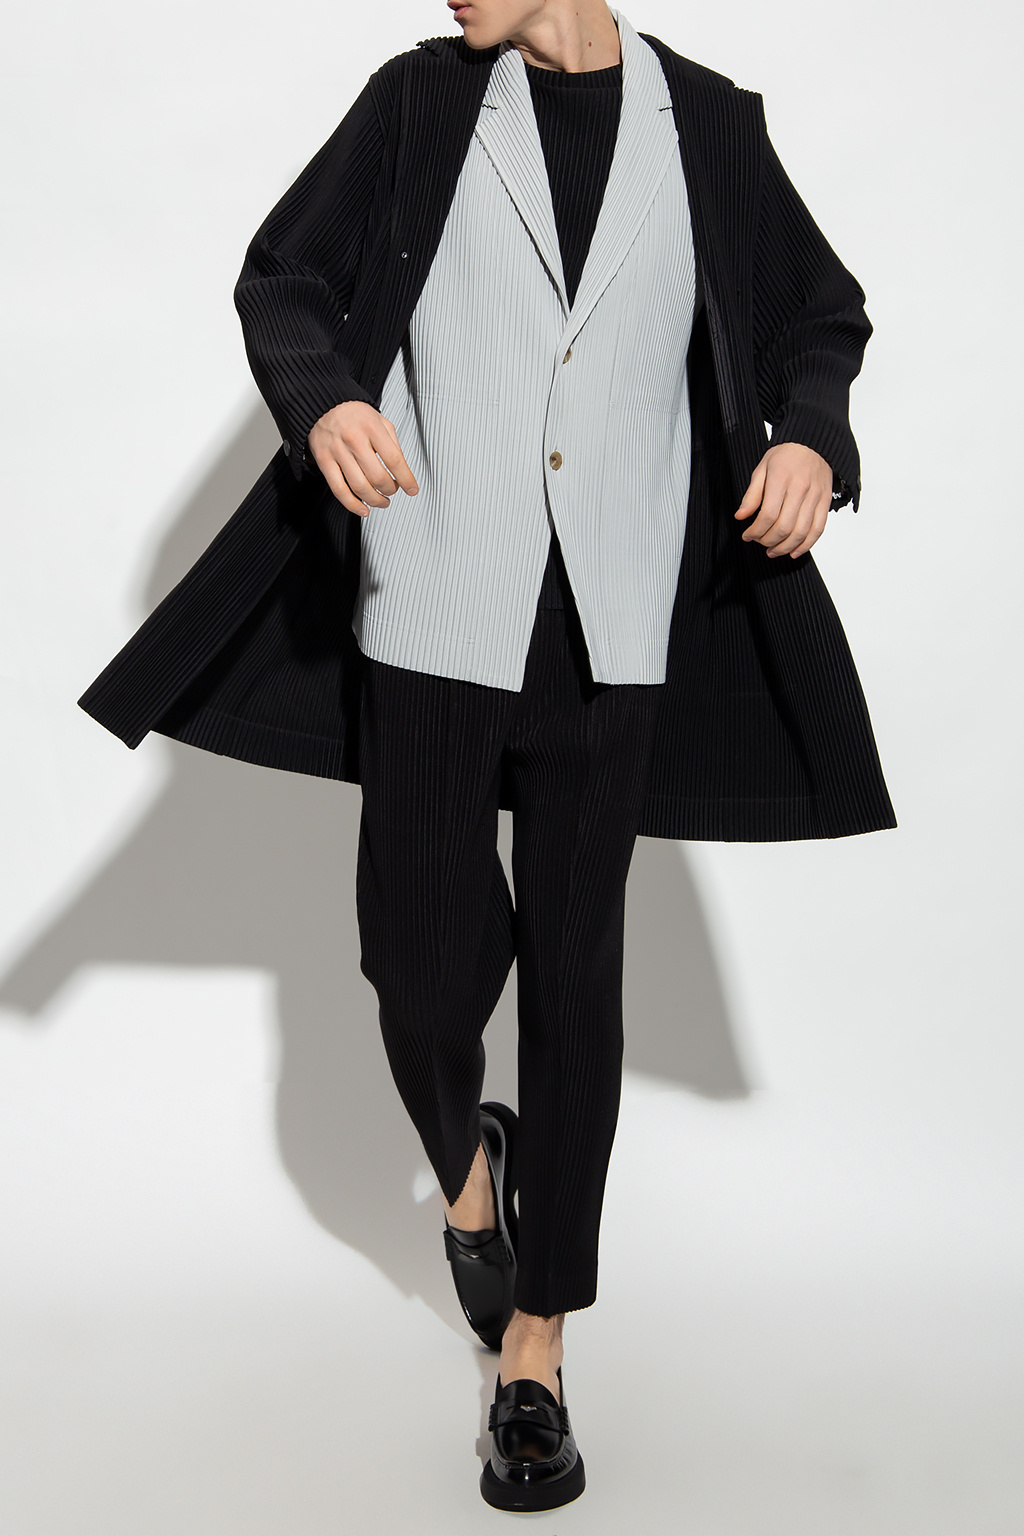 SchaferandweinerShops Canada - and breezy linen jacket Sixth - Black  Pleated coat Issey Miyake Homme Plisse